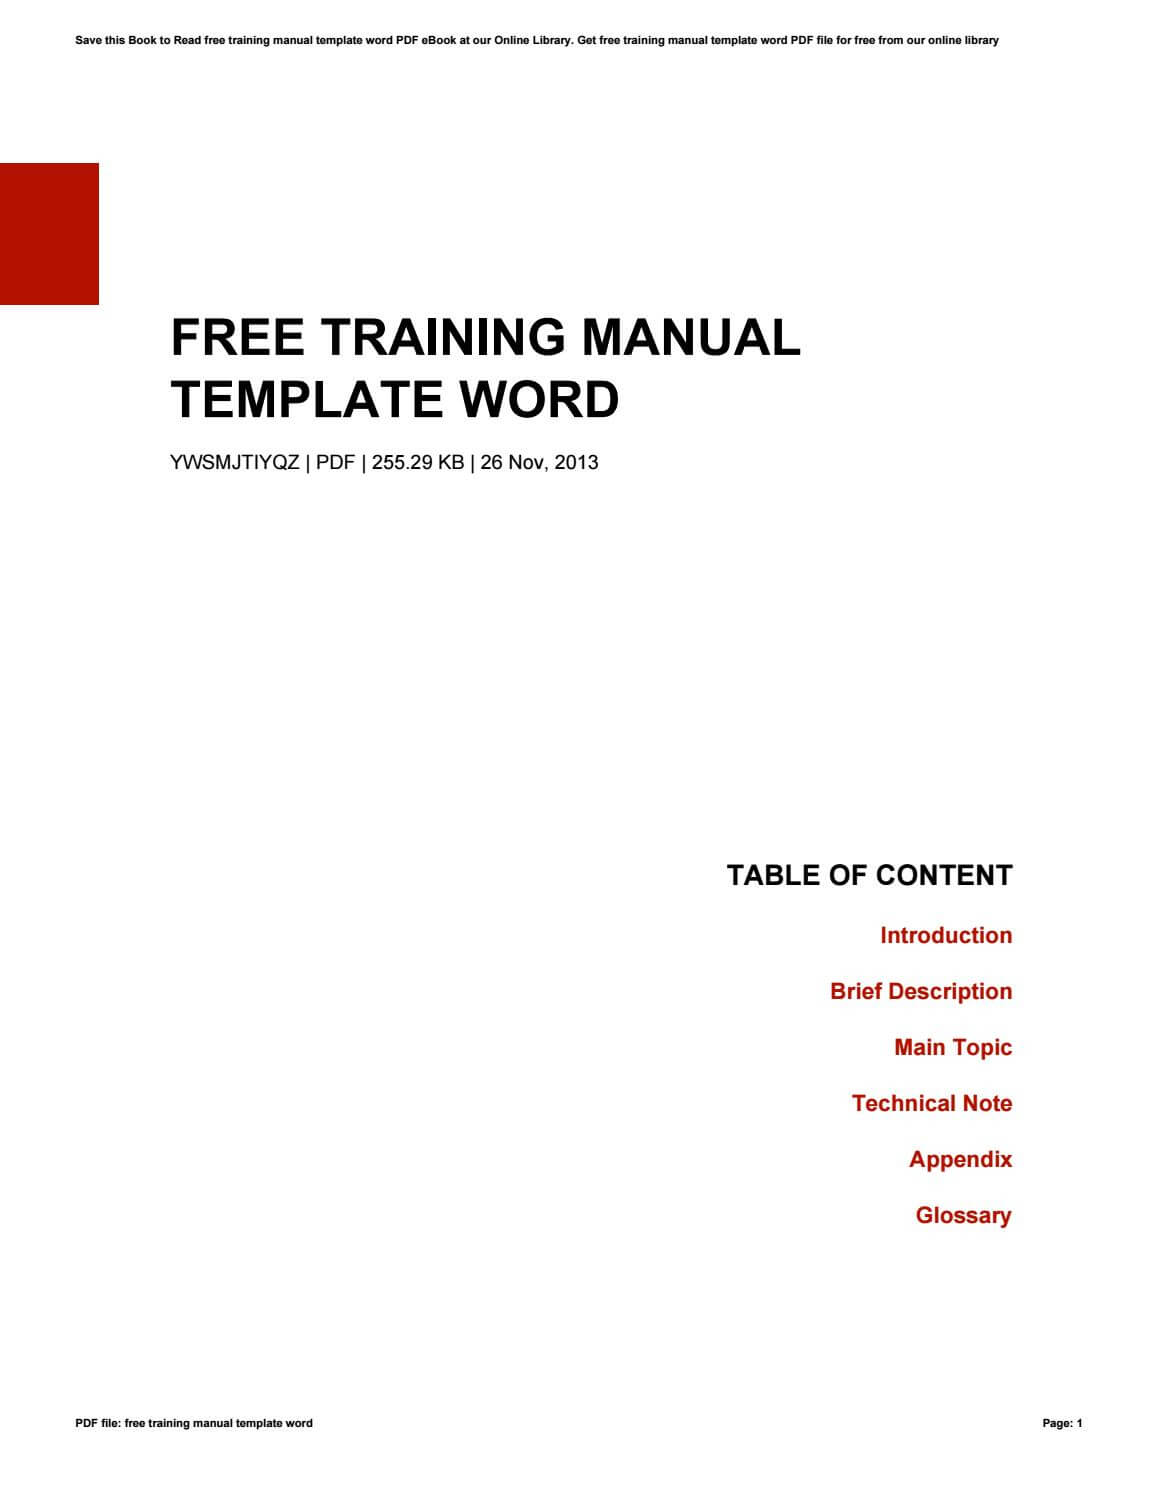 Free Training Manual Template Wordkazelink257 – Issuu Throughout Training Documentation Template Word